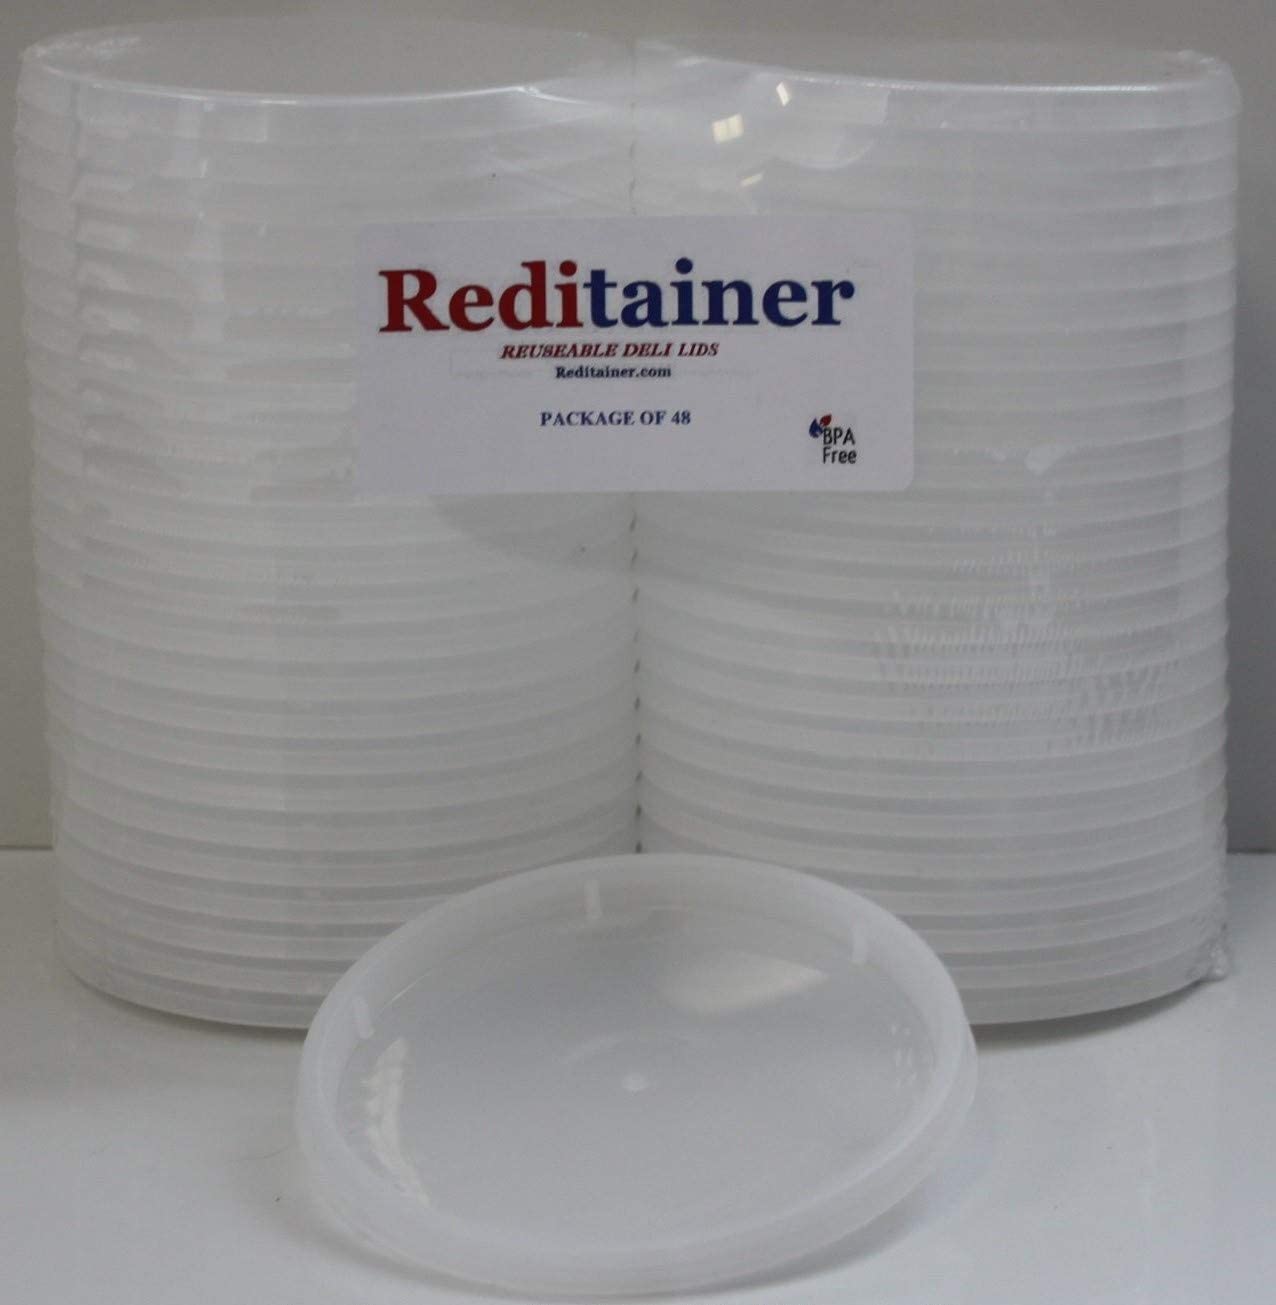 Reditainer® Deli Container Lids - Airtight Durable Plastic Lids - Replacement Reusable Deli Lids for Reditainer® Deli Containers - * LIDS ONLY * - Package Count (48)